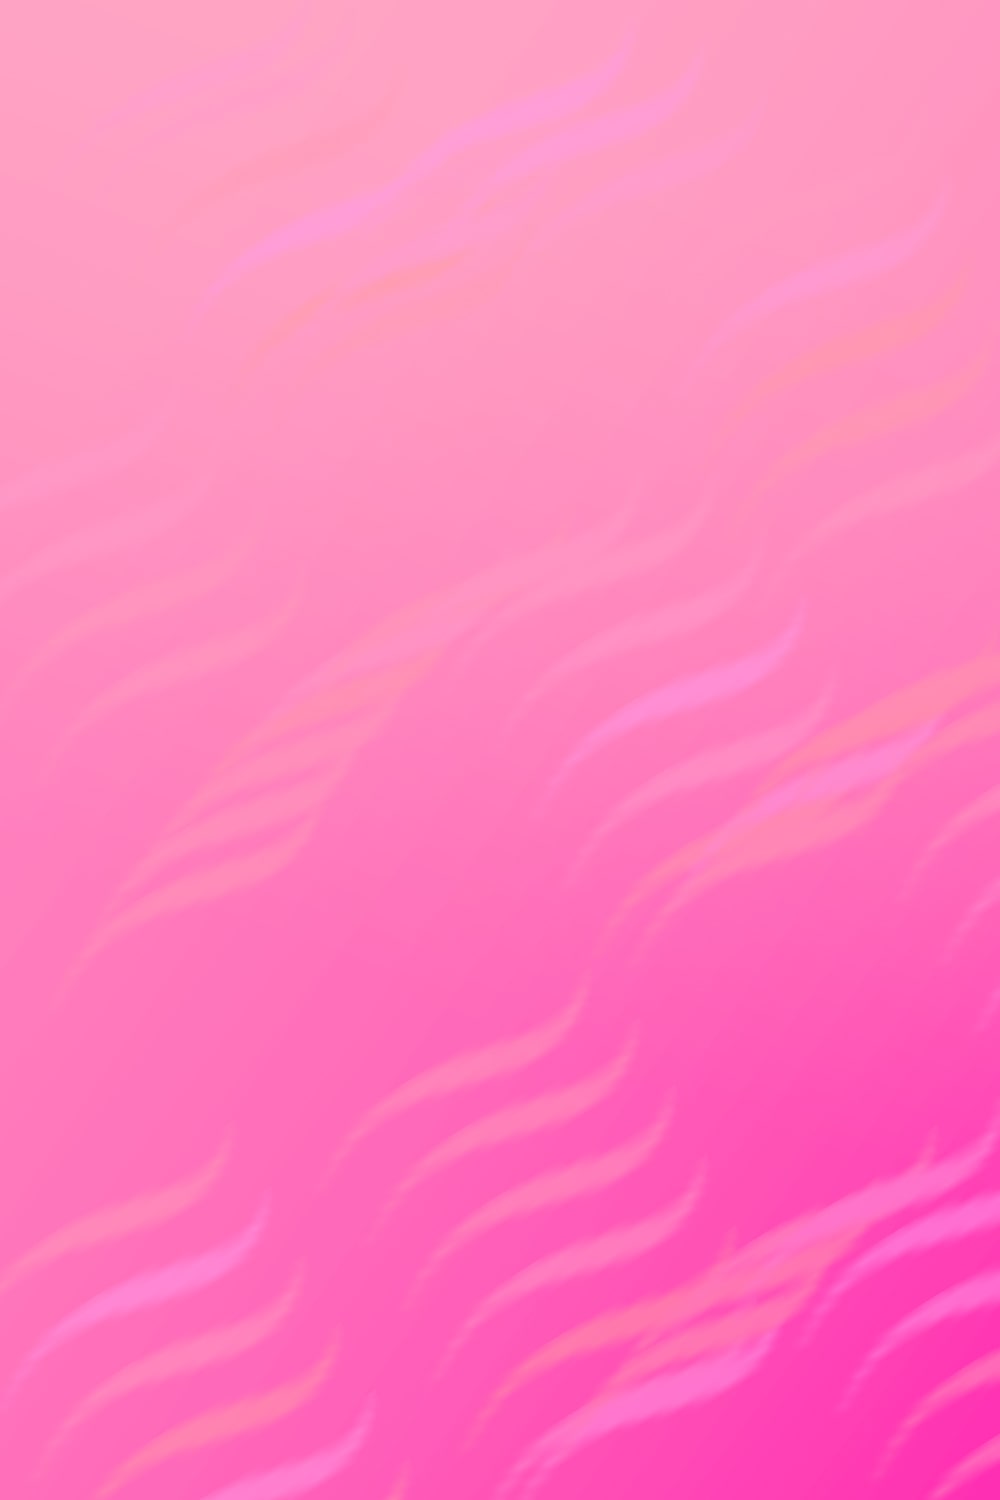 Light Pink Background hd